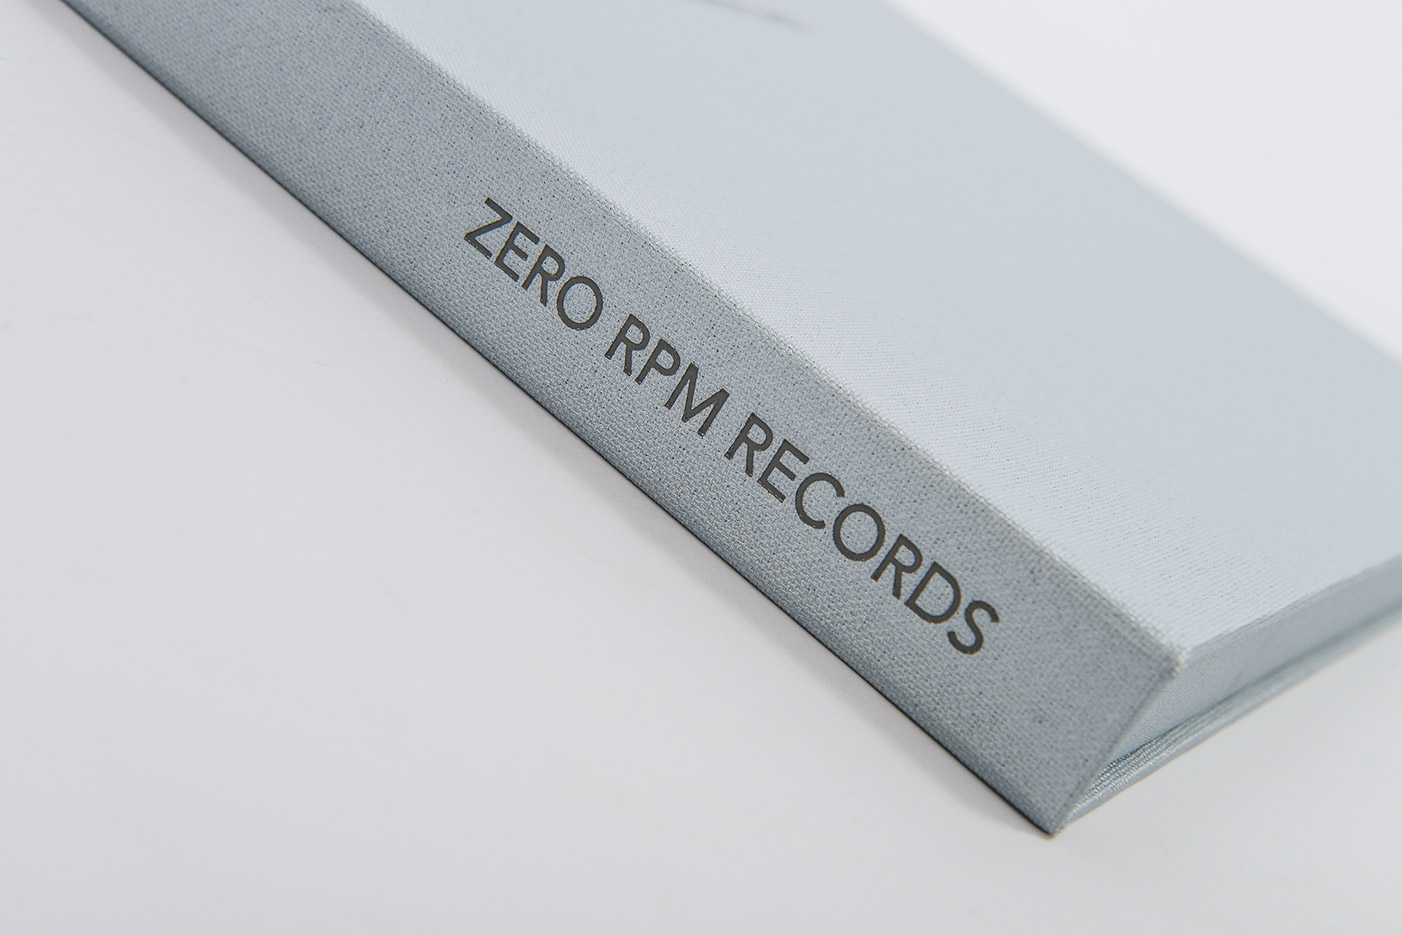 Ralf Broeg | zero rpm records publication